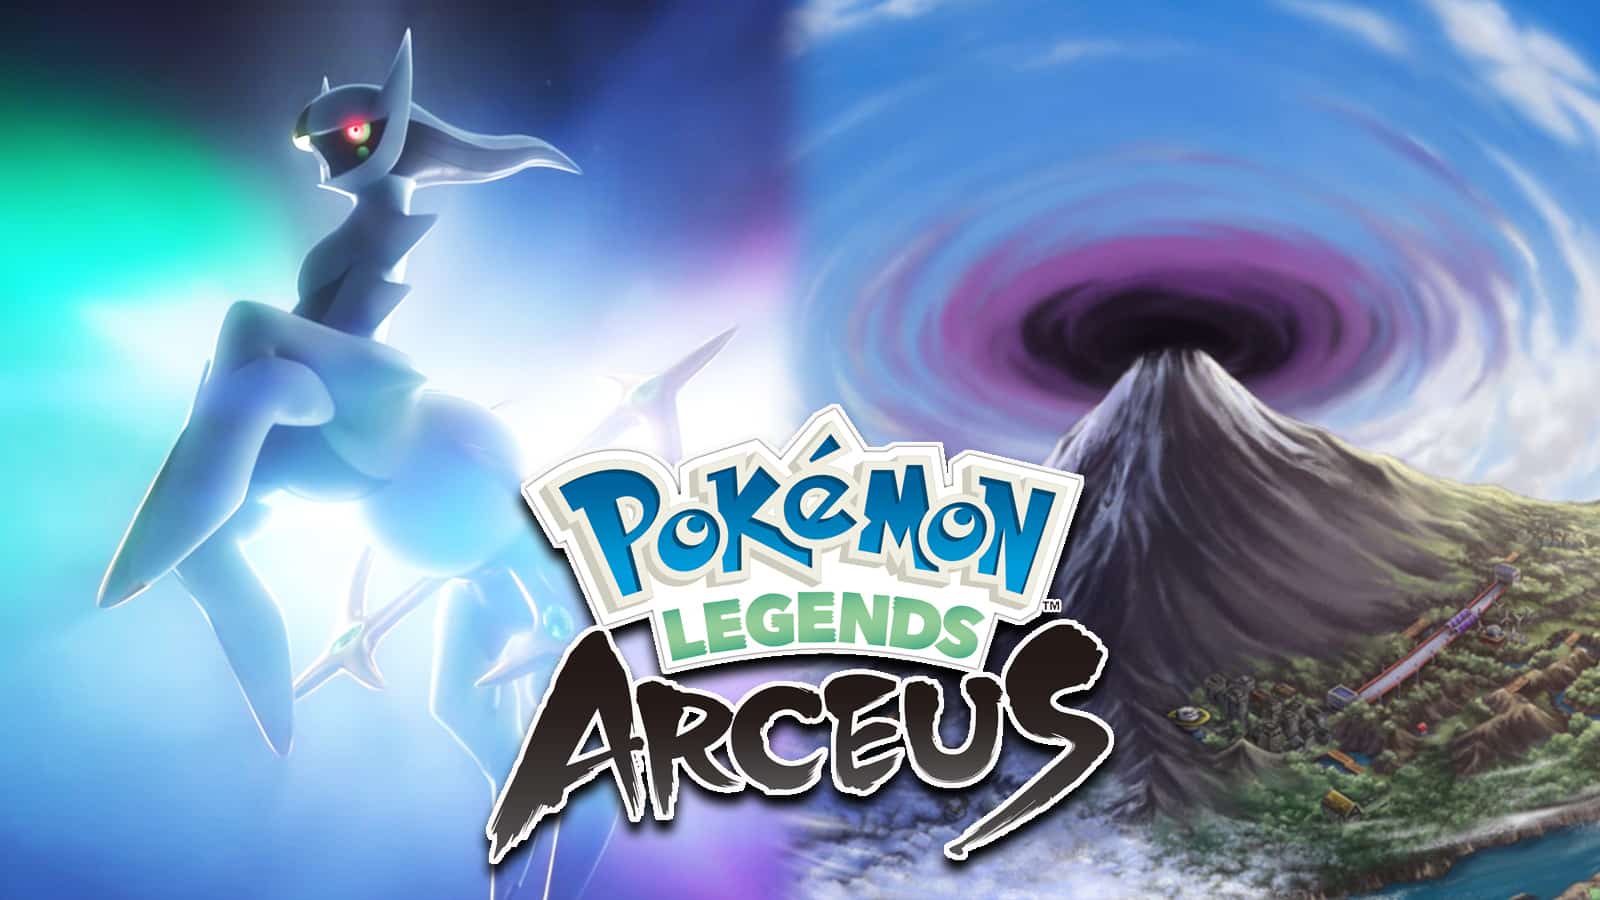 Pokémon Legends: Arceus - Wikidata